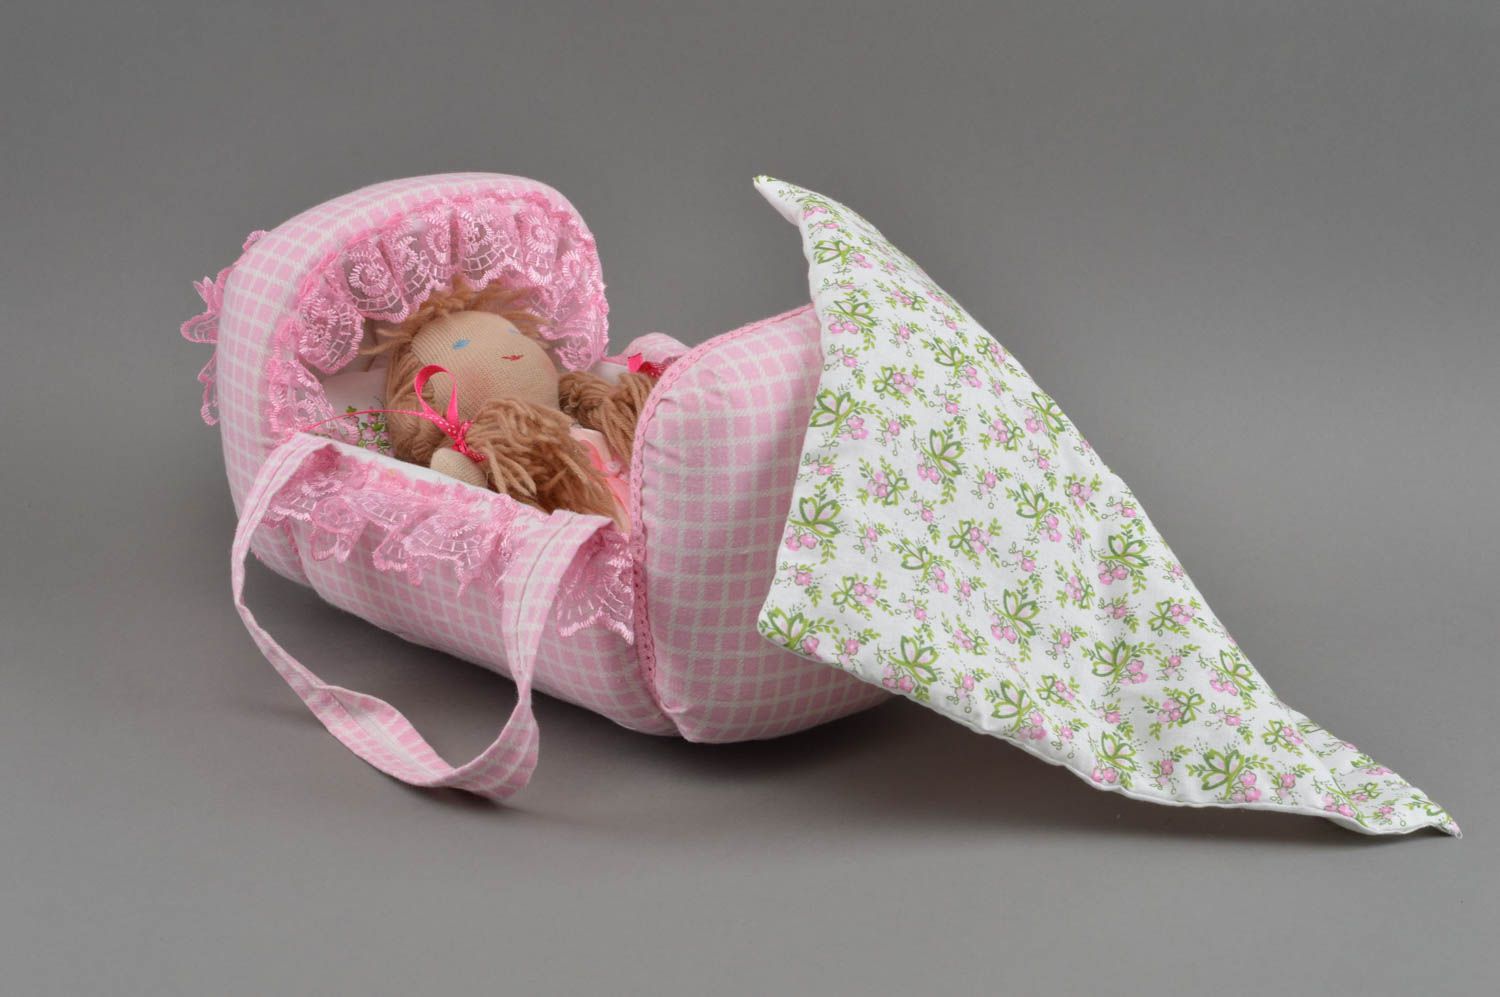 Handmade fabric toy doll in cradle stuffed toy in cradle nursery decor ideas photo 2